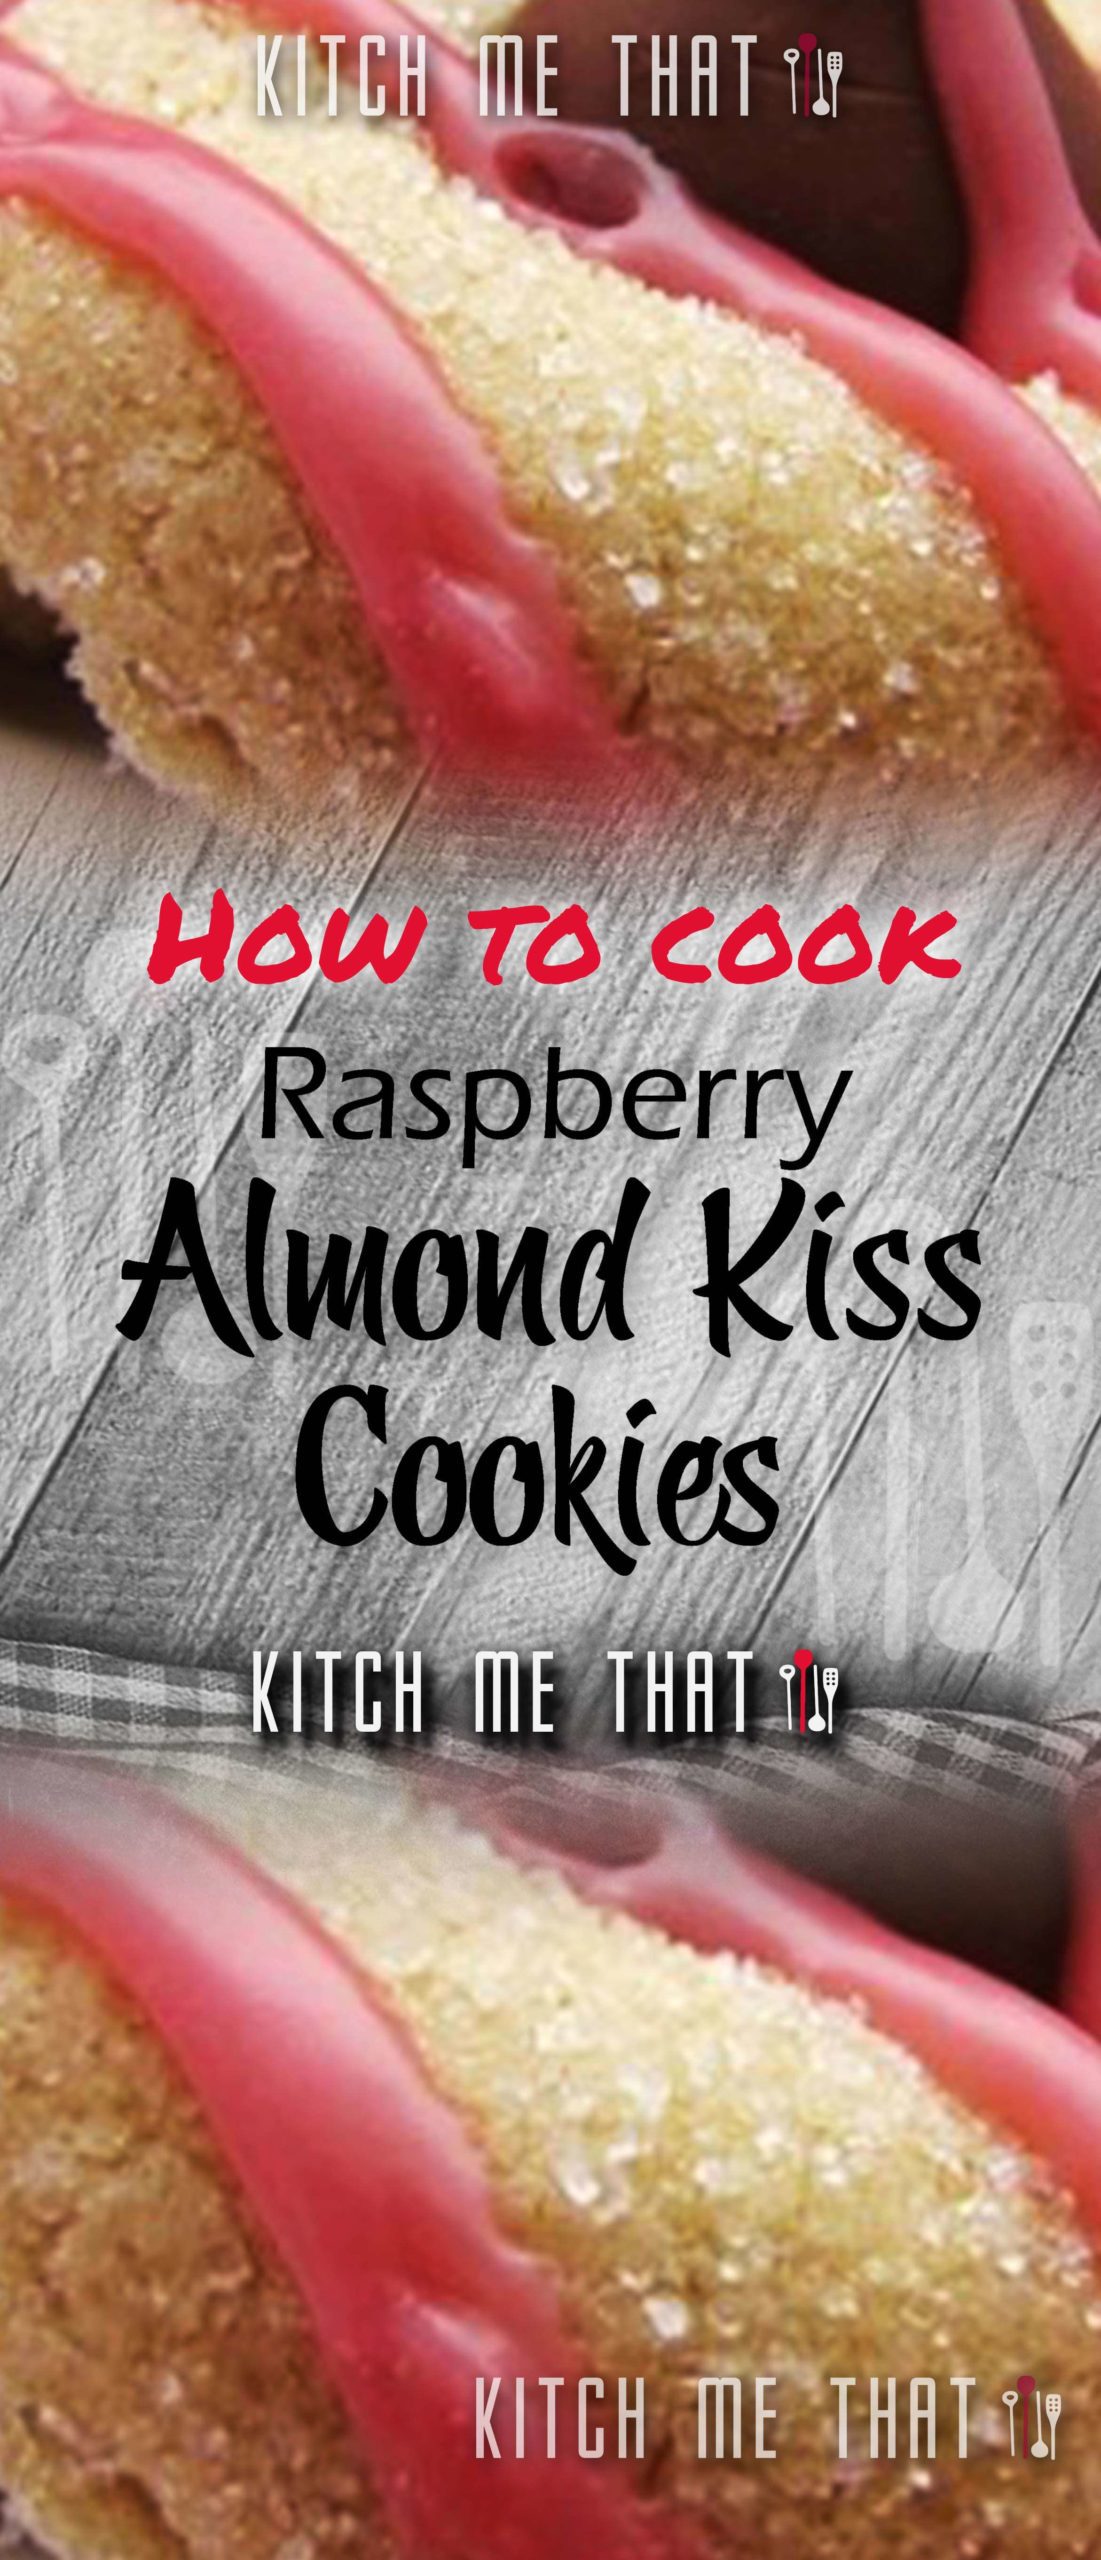 Raspberry Almond Kiss Cookies